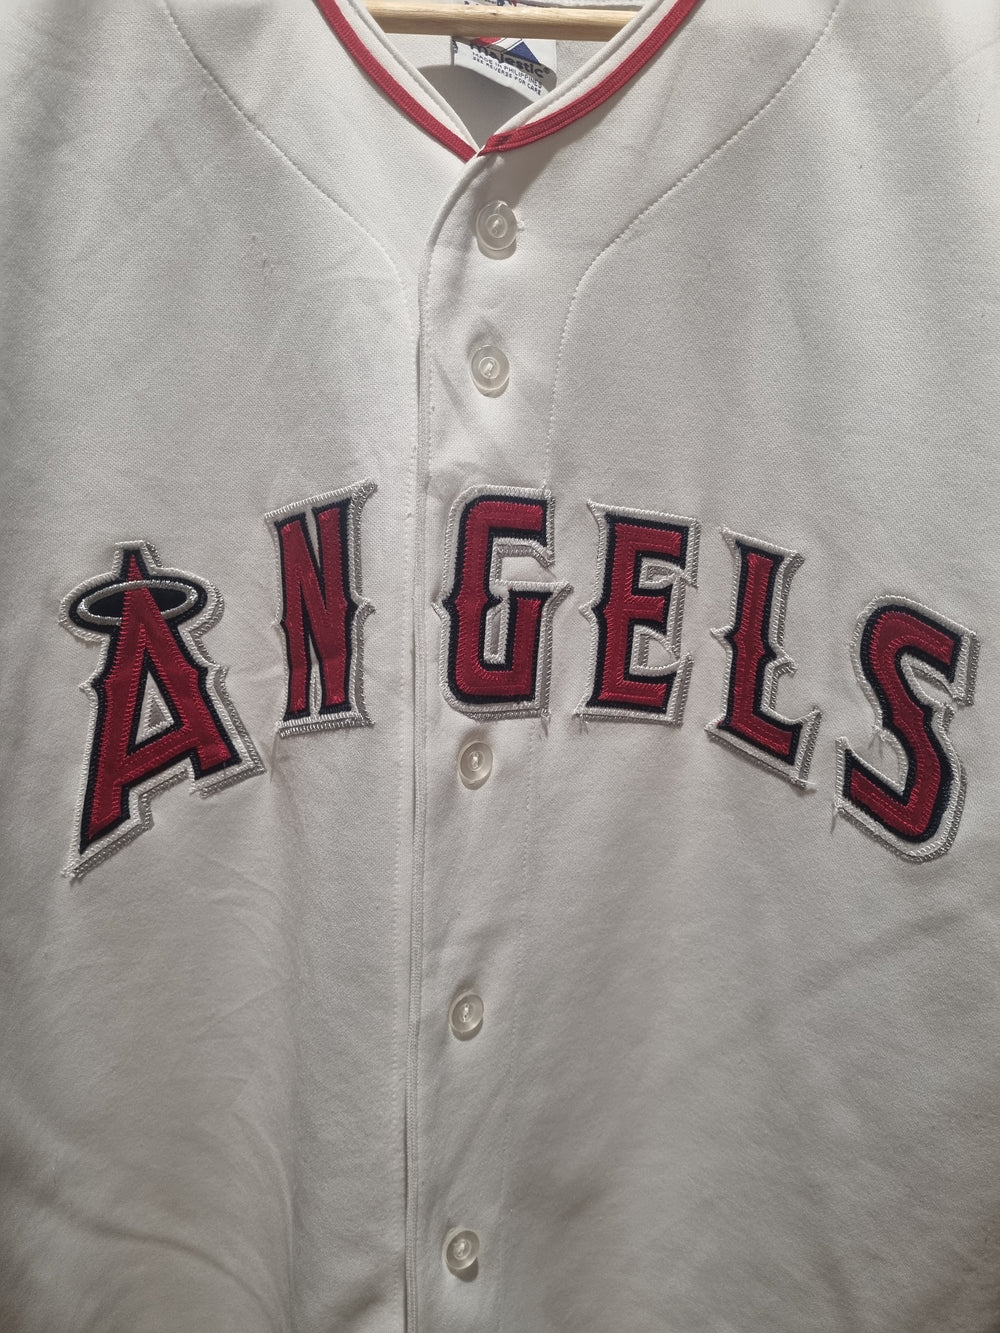 Los Angeles Angels Majestic XL